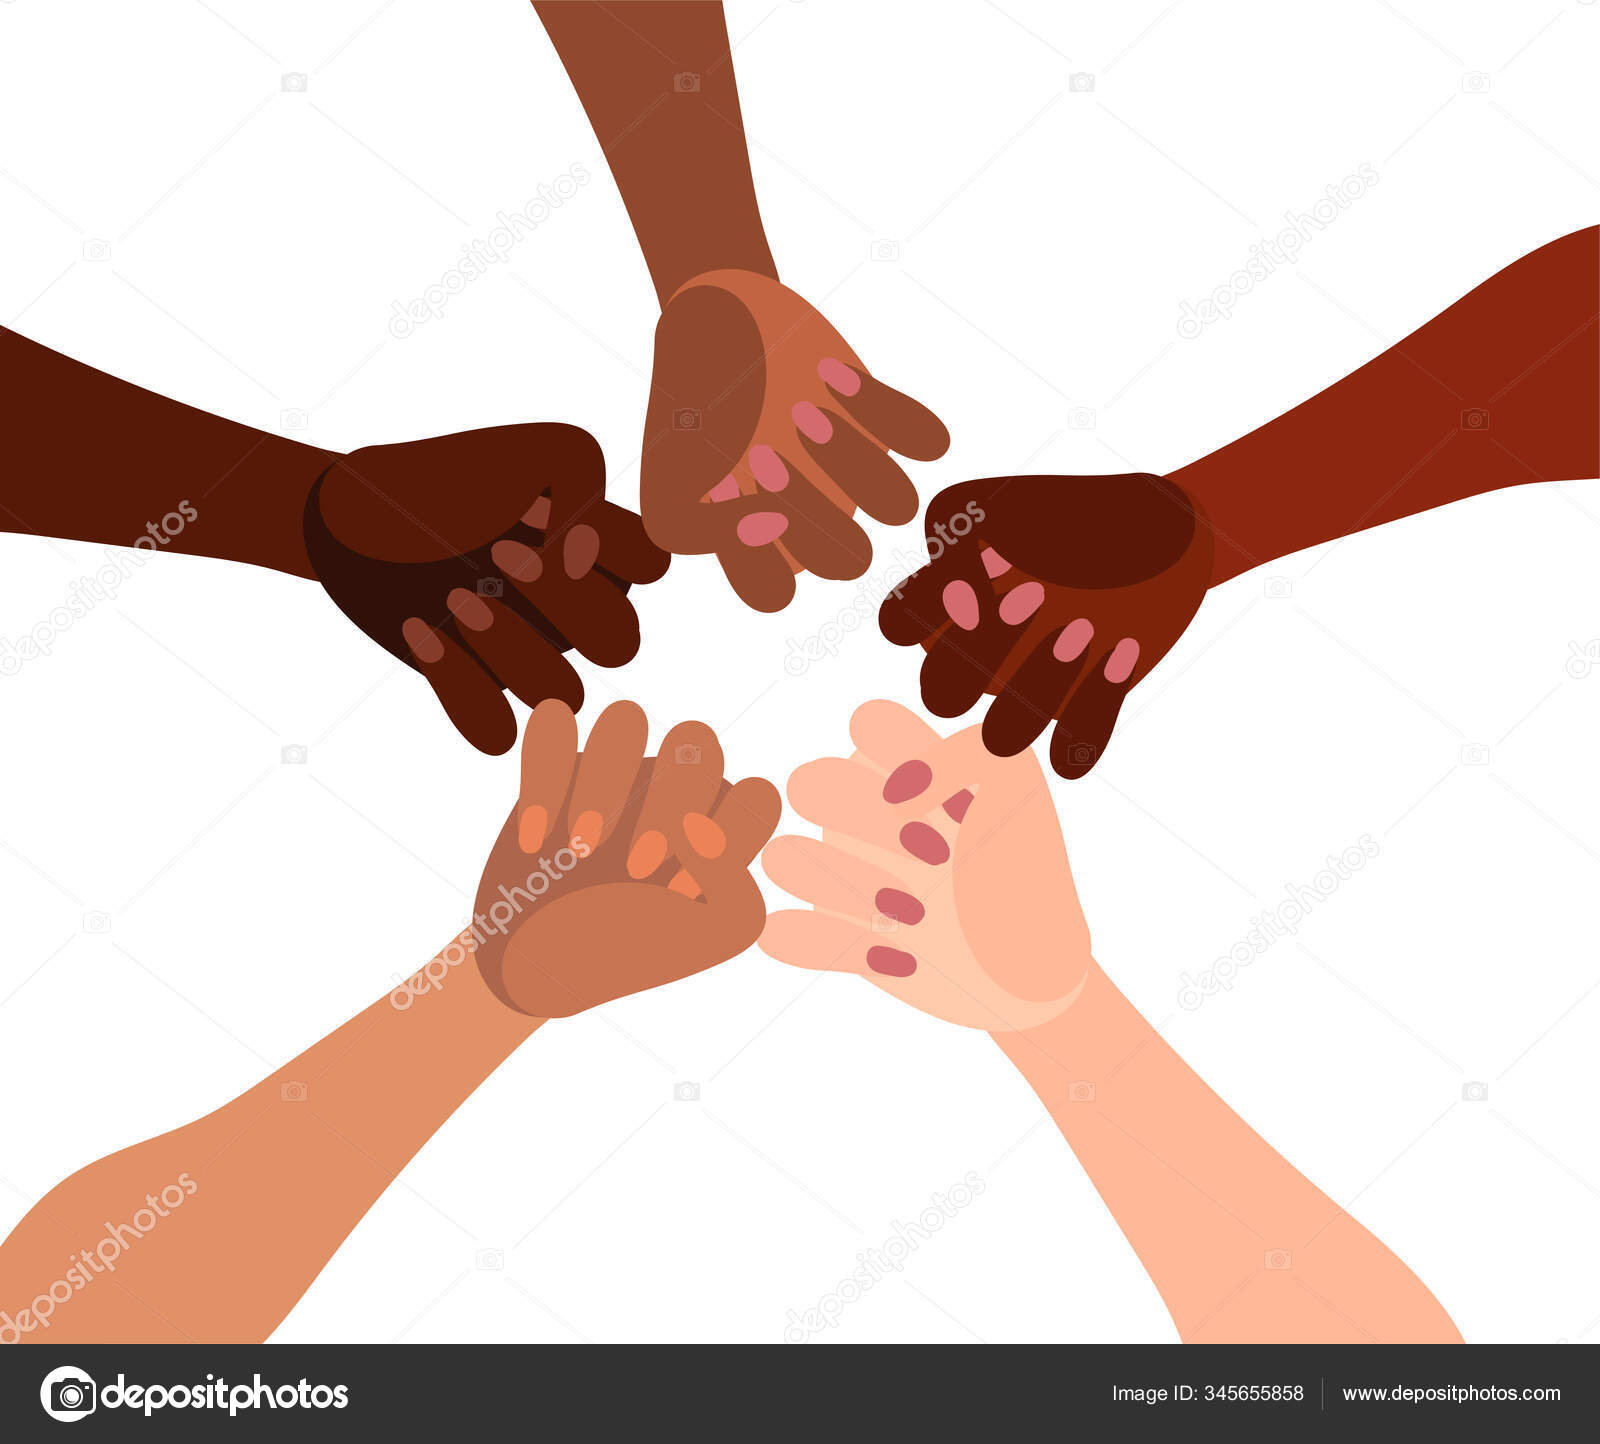 racial equality hands